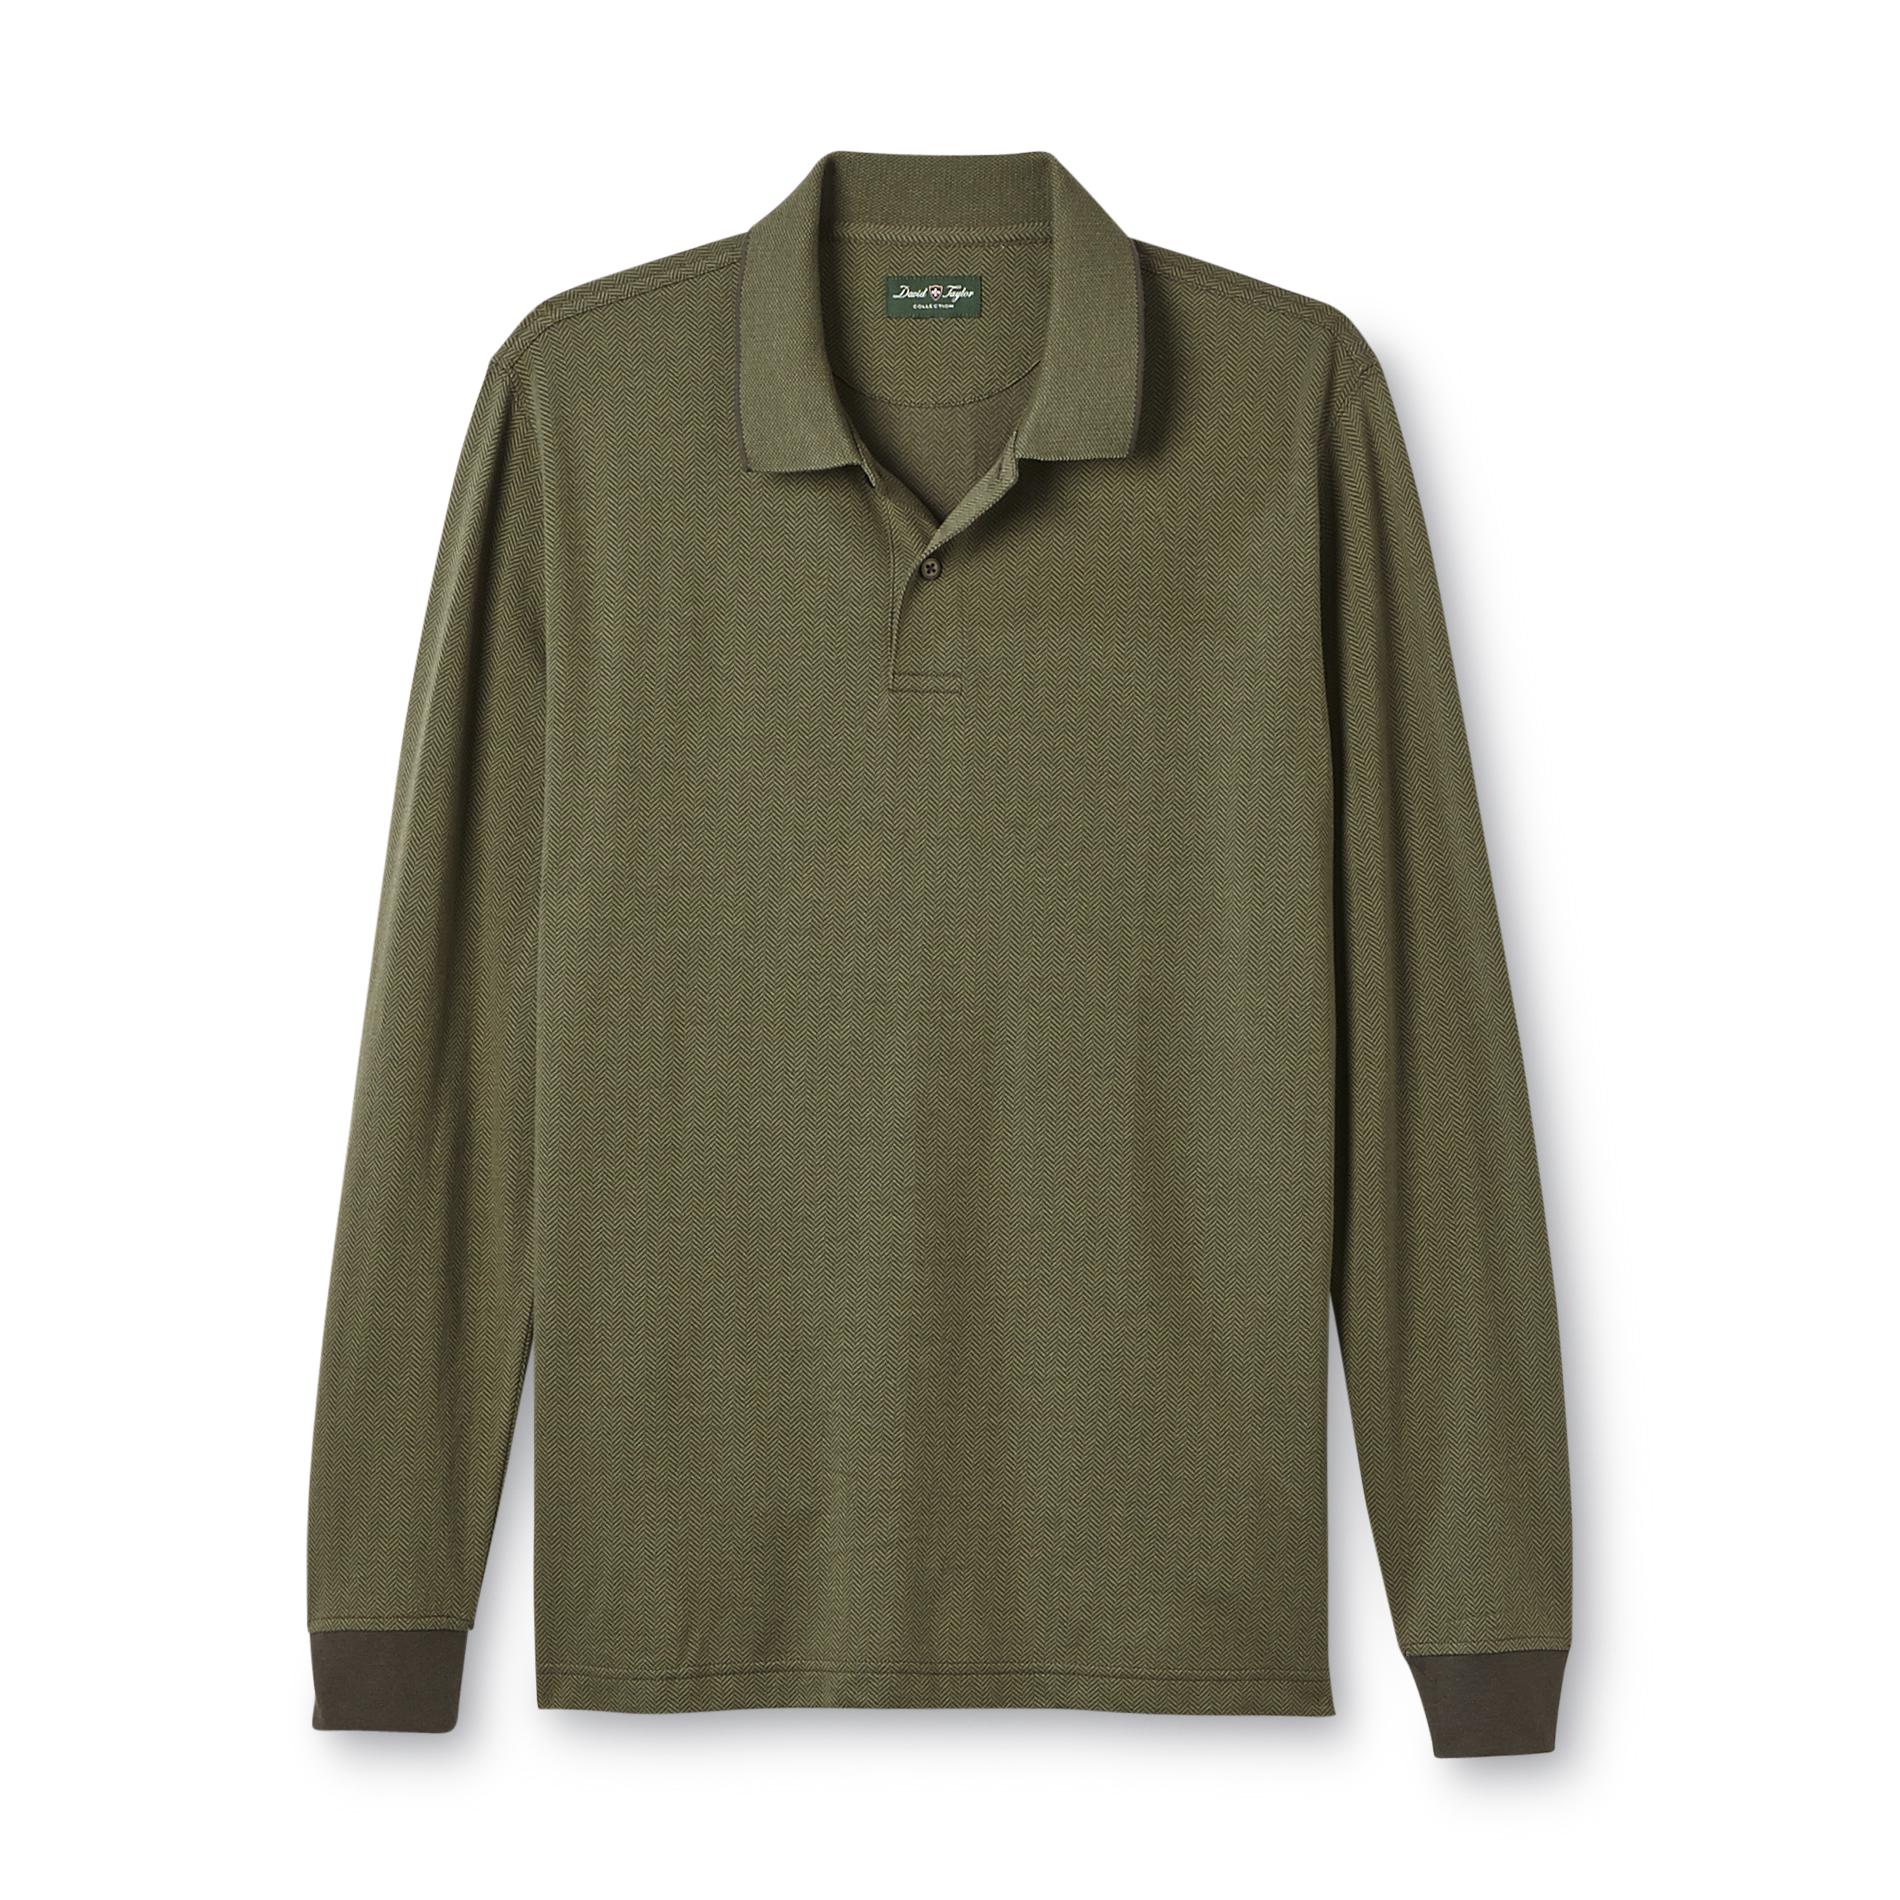 David Taylor Collection Men's Long-Sleeve Polo Shirt - Herringbone